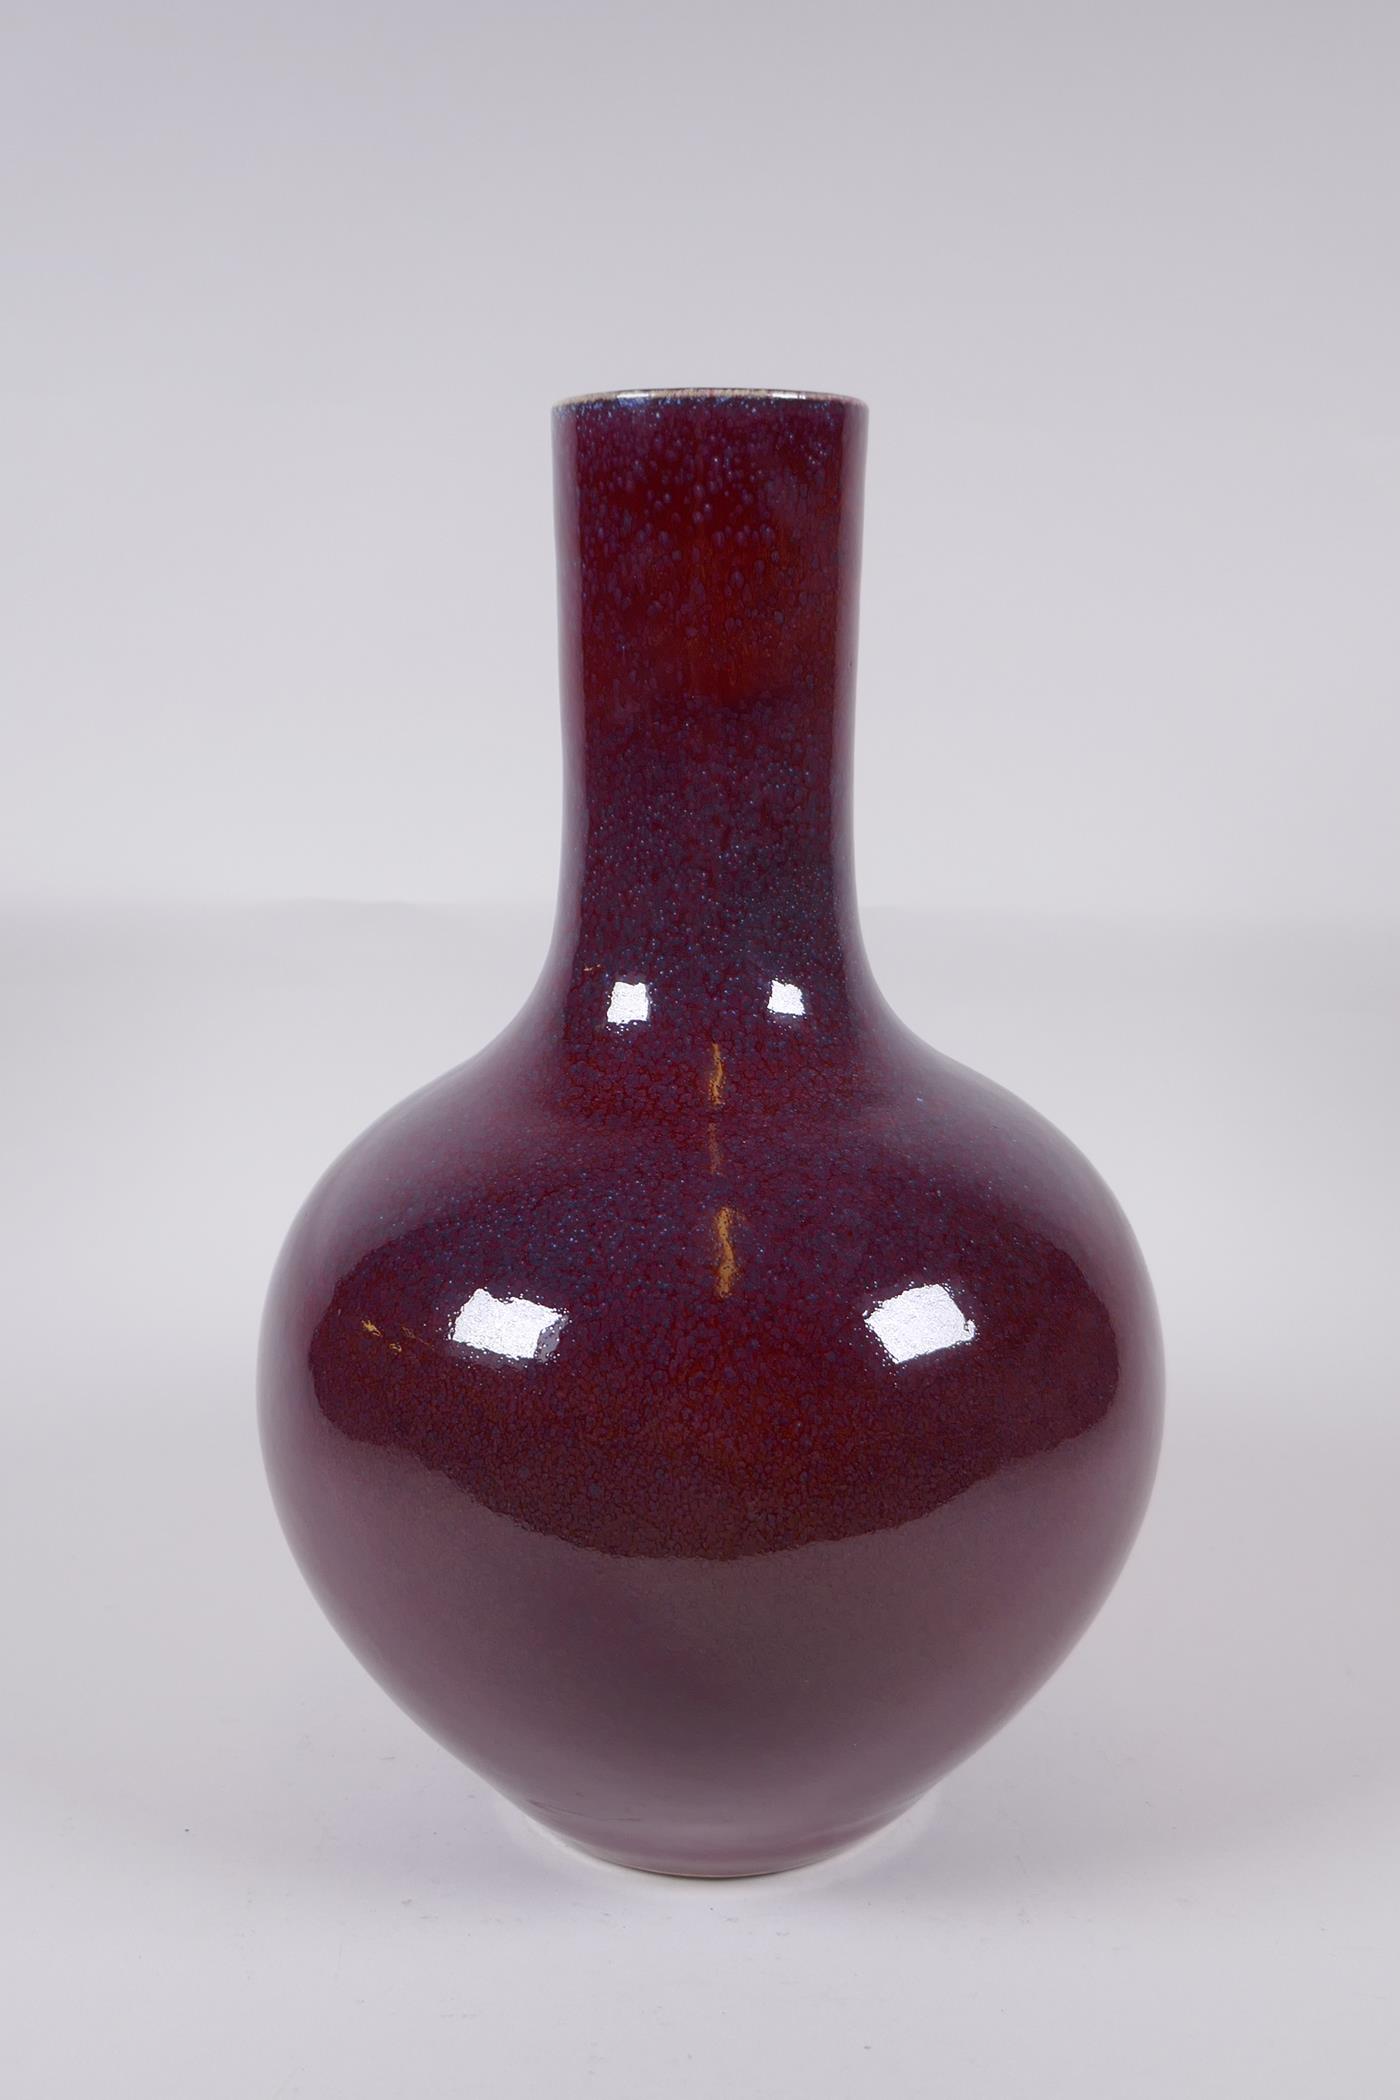 A Chinese flambe glazed porcelain bottle vase, Yong Zheng 6 character mark to base, 33cm high